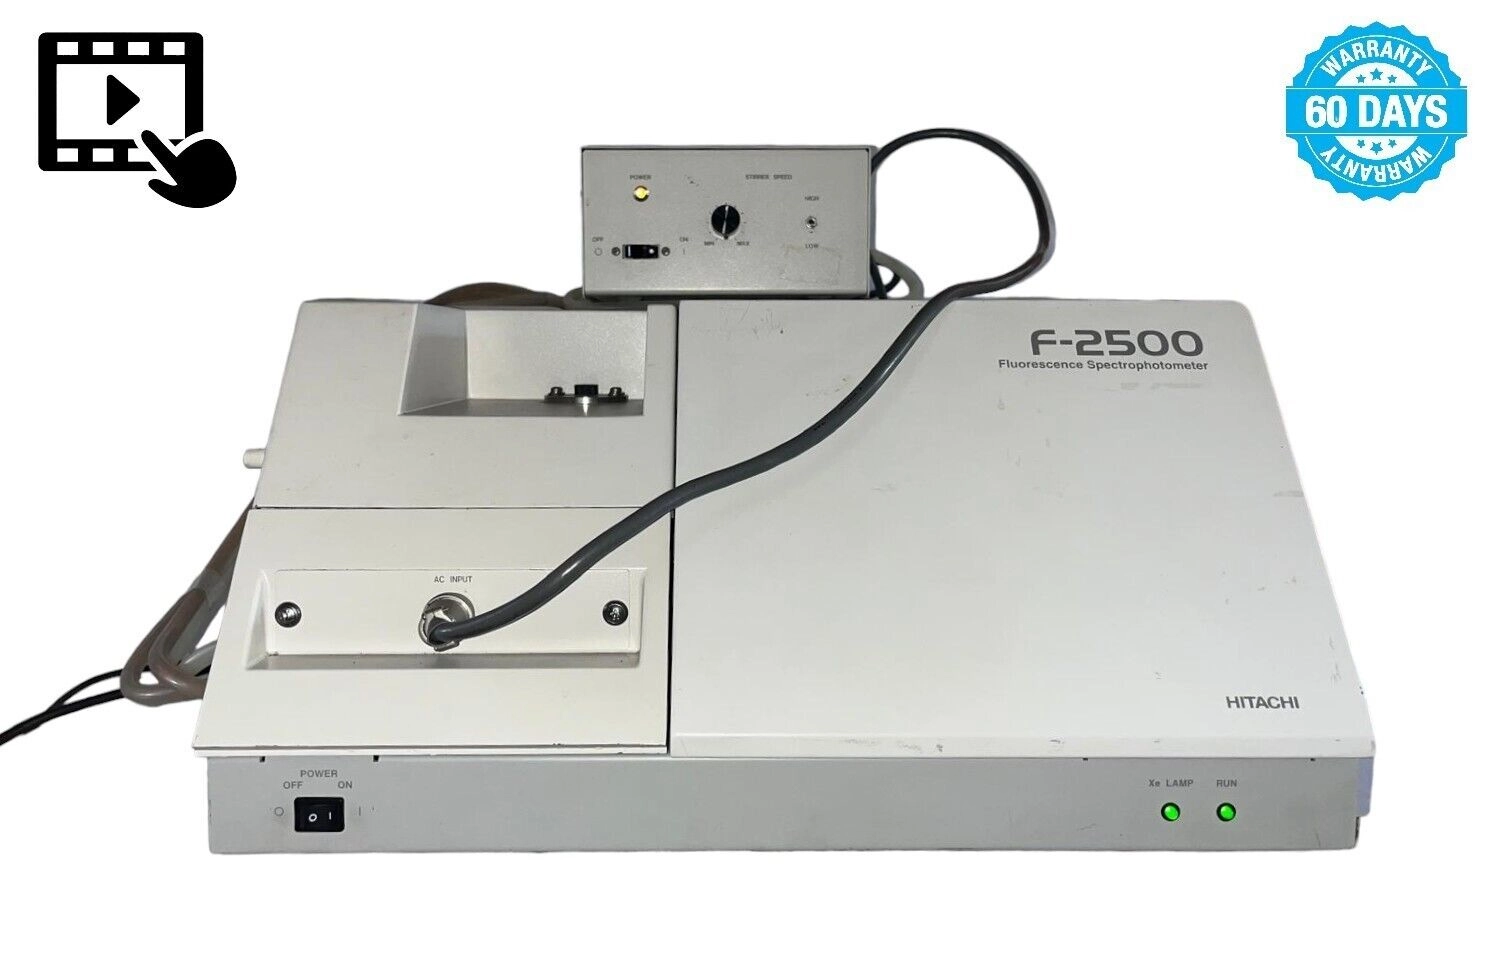 Hitachi F-2500 Fluorescence Spectrophotometer + St